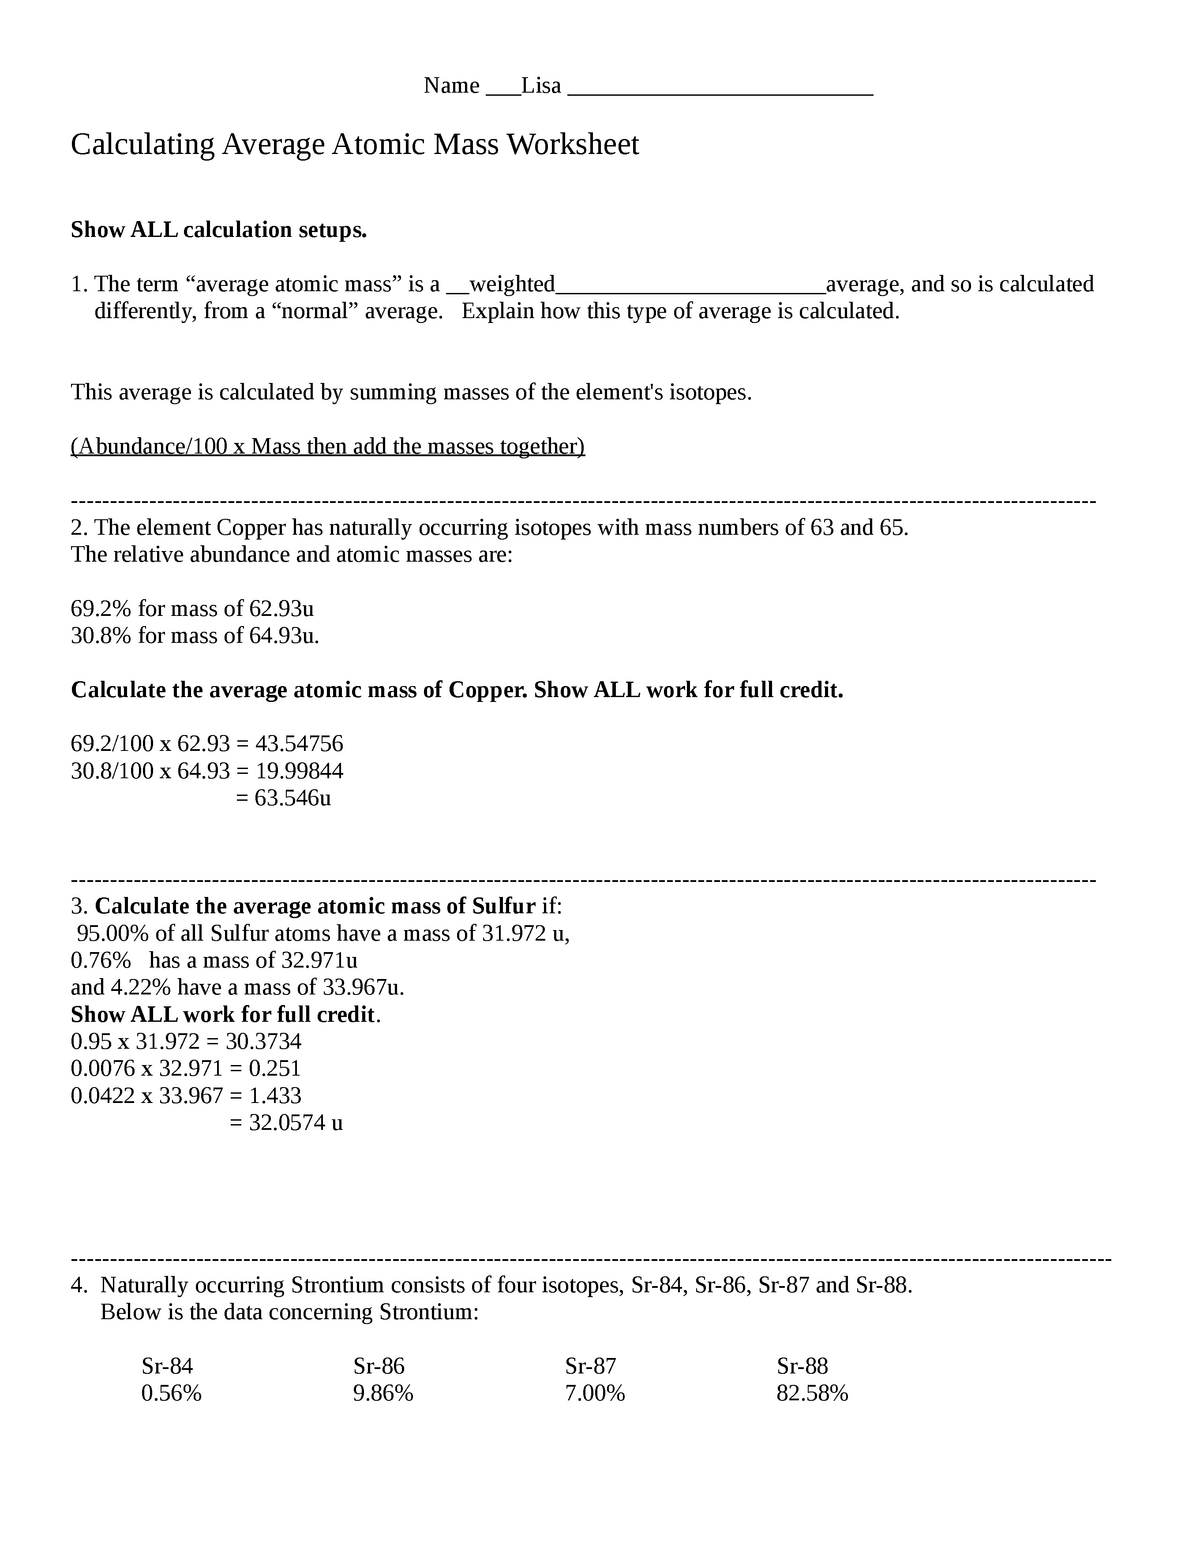 Calculating Average Atomic Mass Worksheet - CHEM 20 - Physical With Average Atomic Mass Worksheet